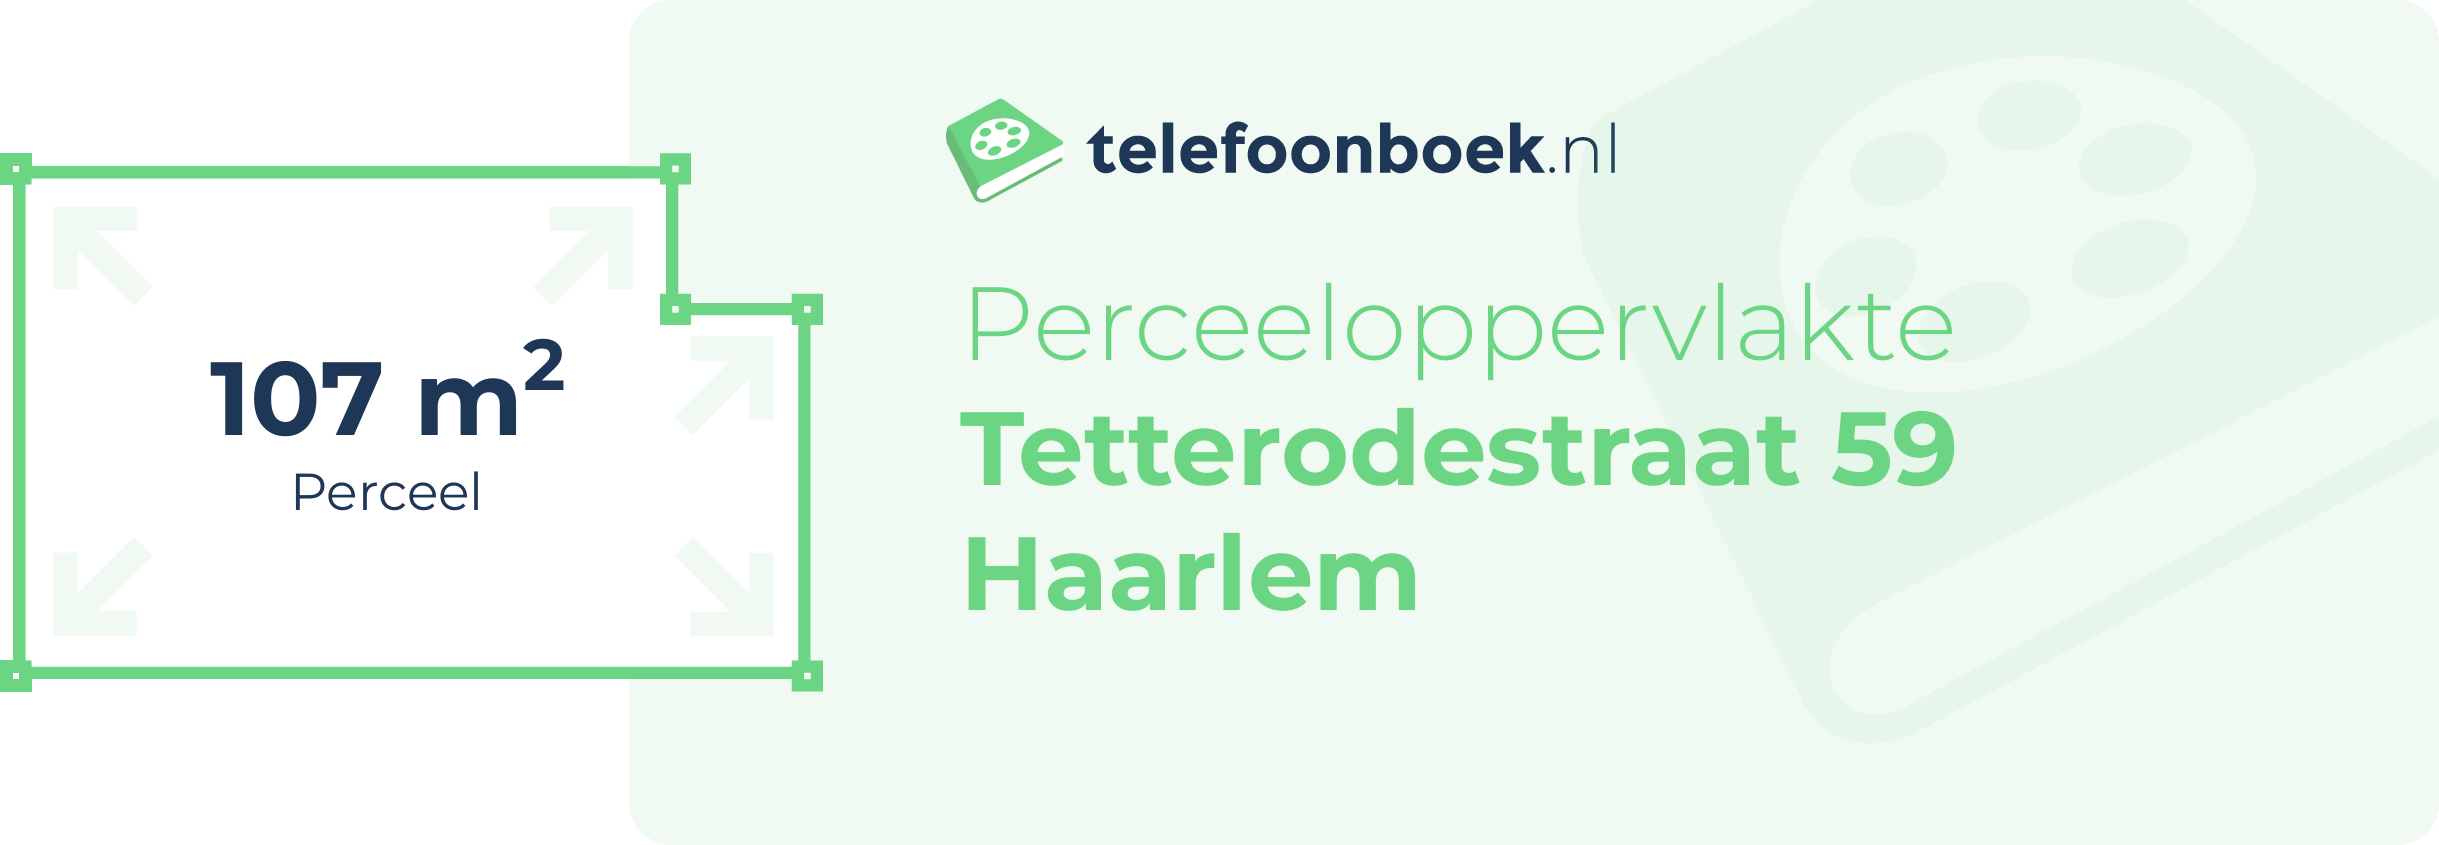 Perceeloppervlakte Tetterodestraat 59 Haarlem